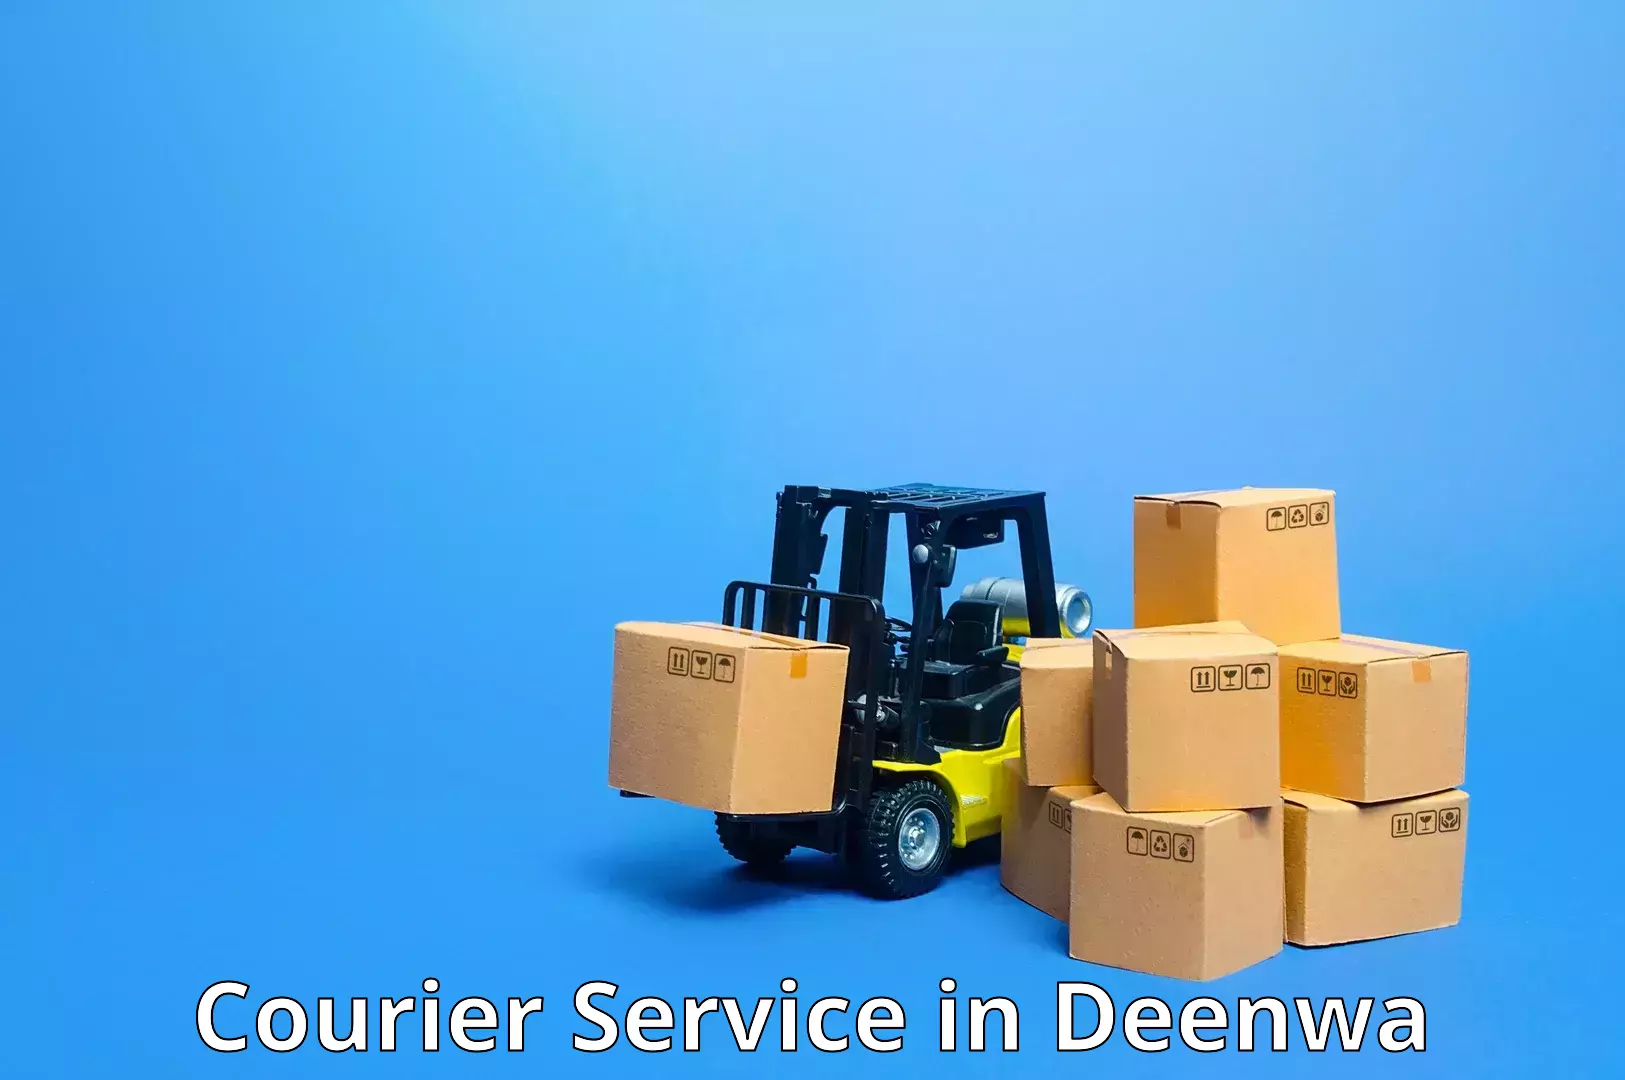 Efficient freight service in Deenwa